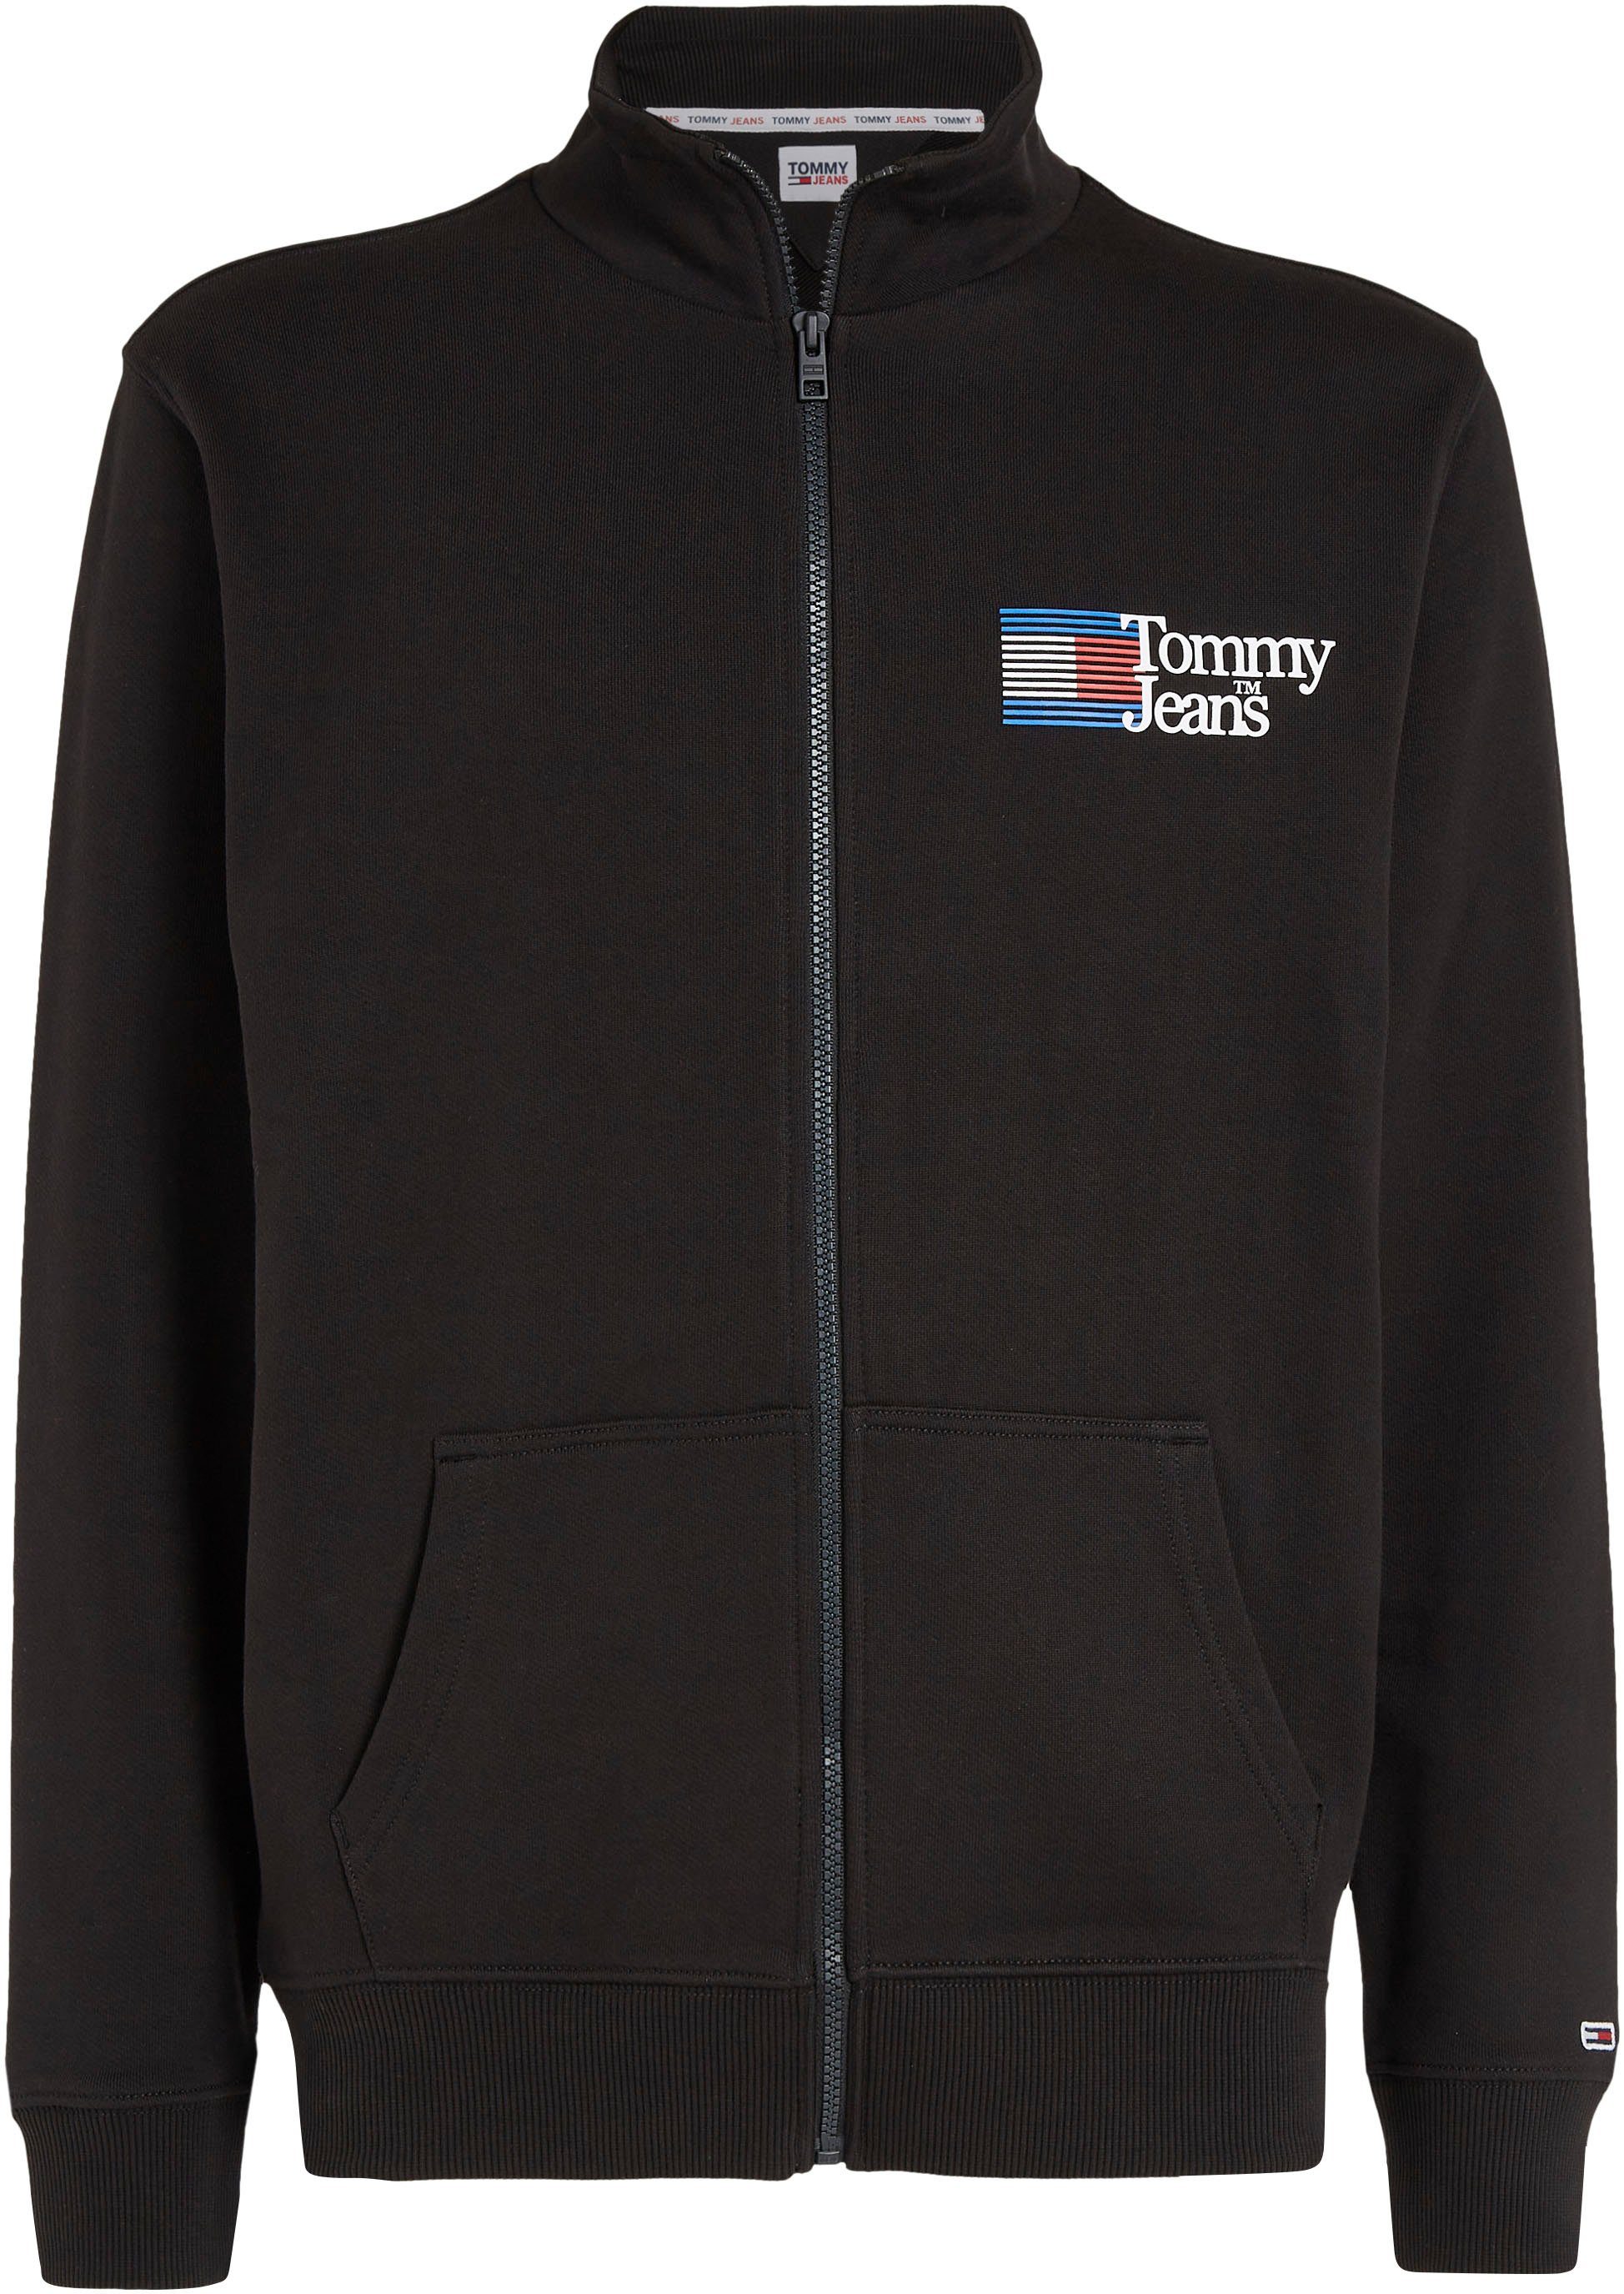 TJM FULL Logodruck Sweatshirt mit Jeans ZIP Black ENTRY Tommy REG